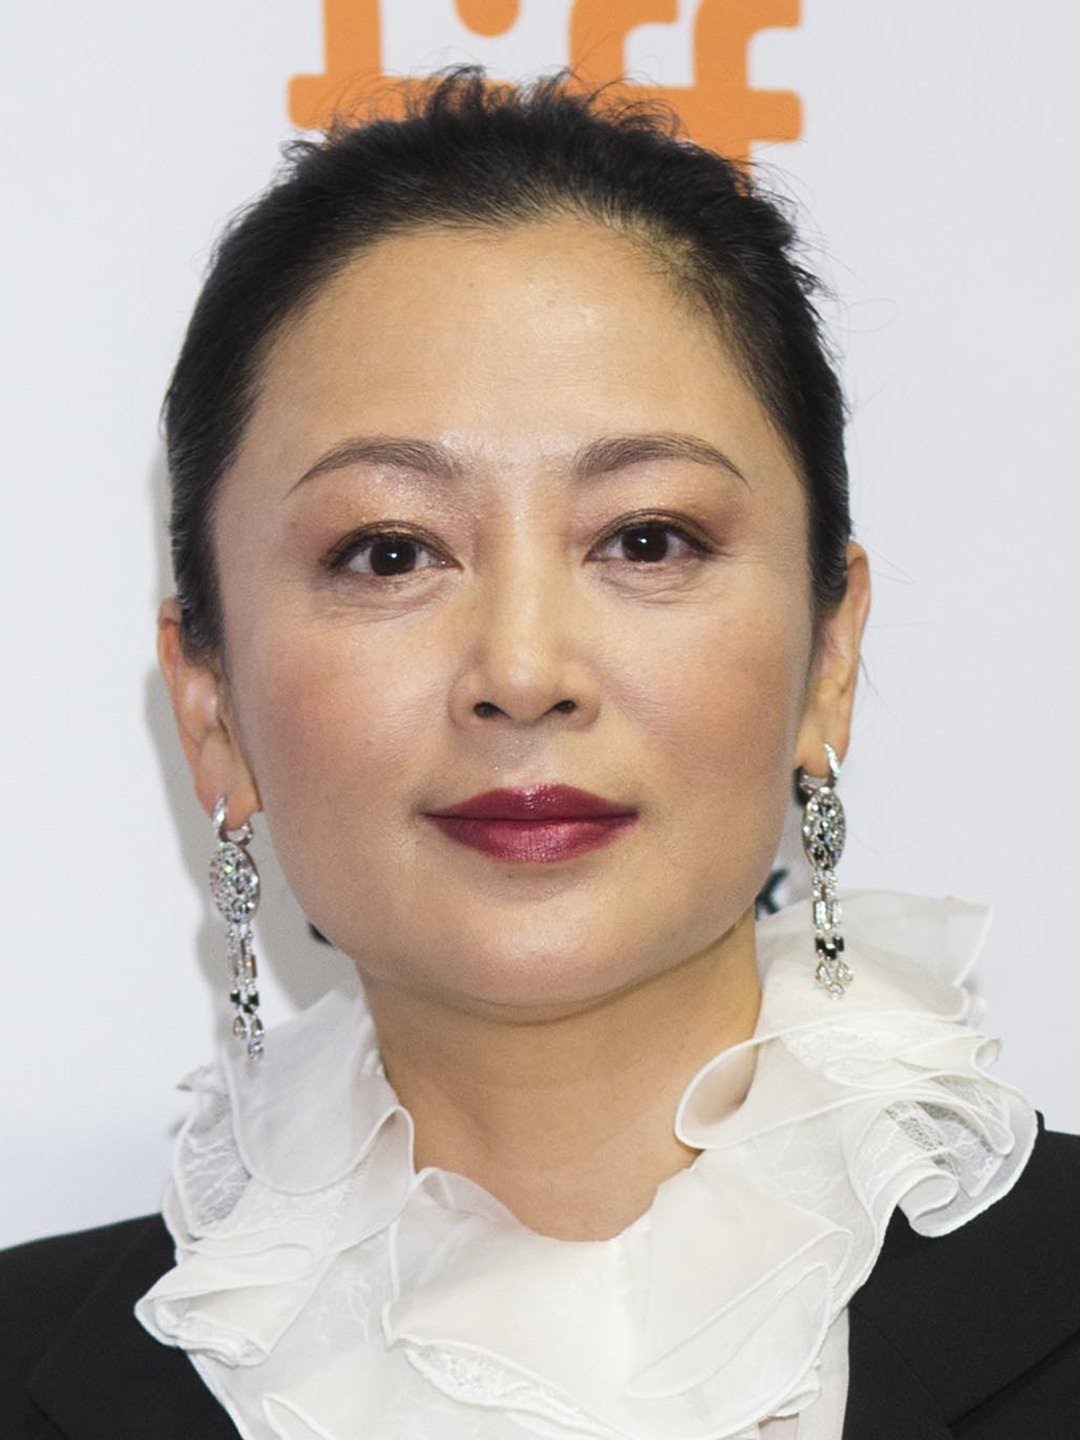 Chen Hong (actress) Chinese Actress, Producer